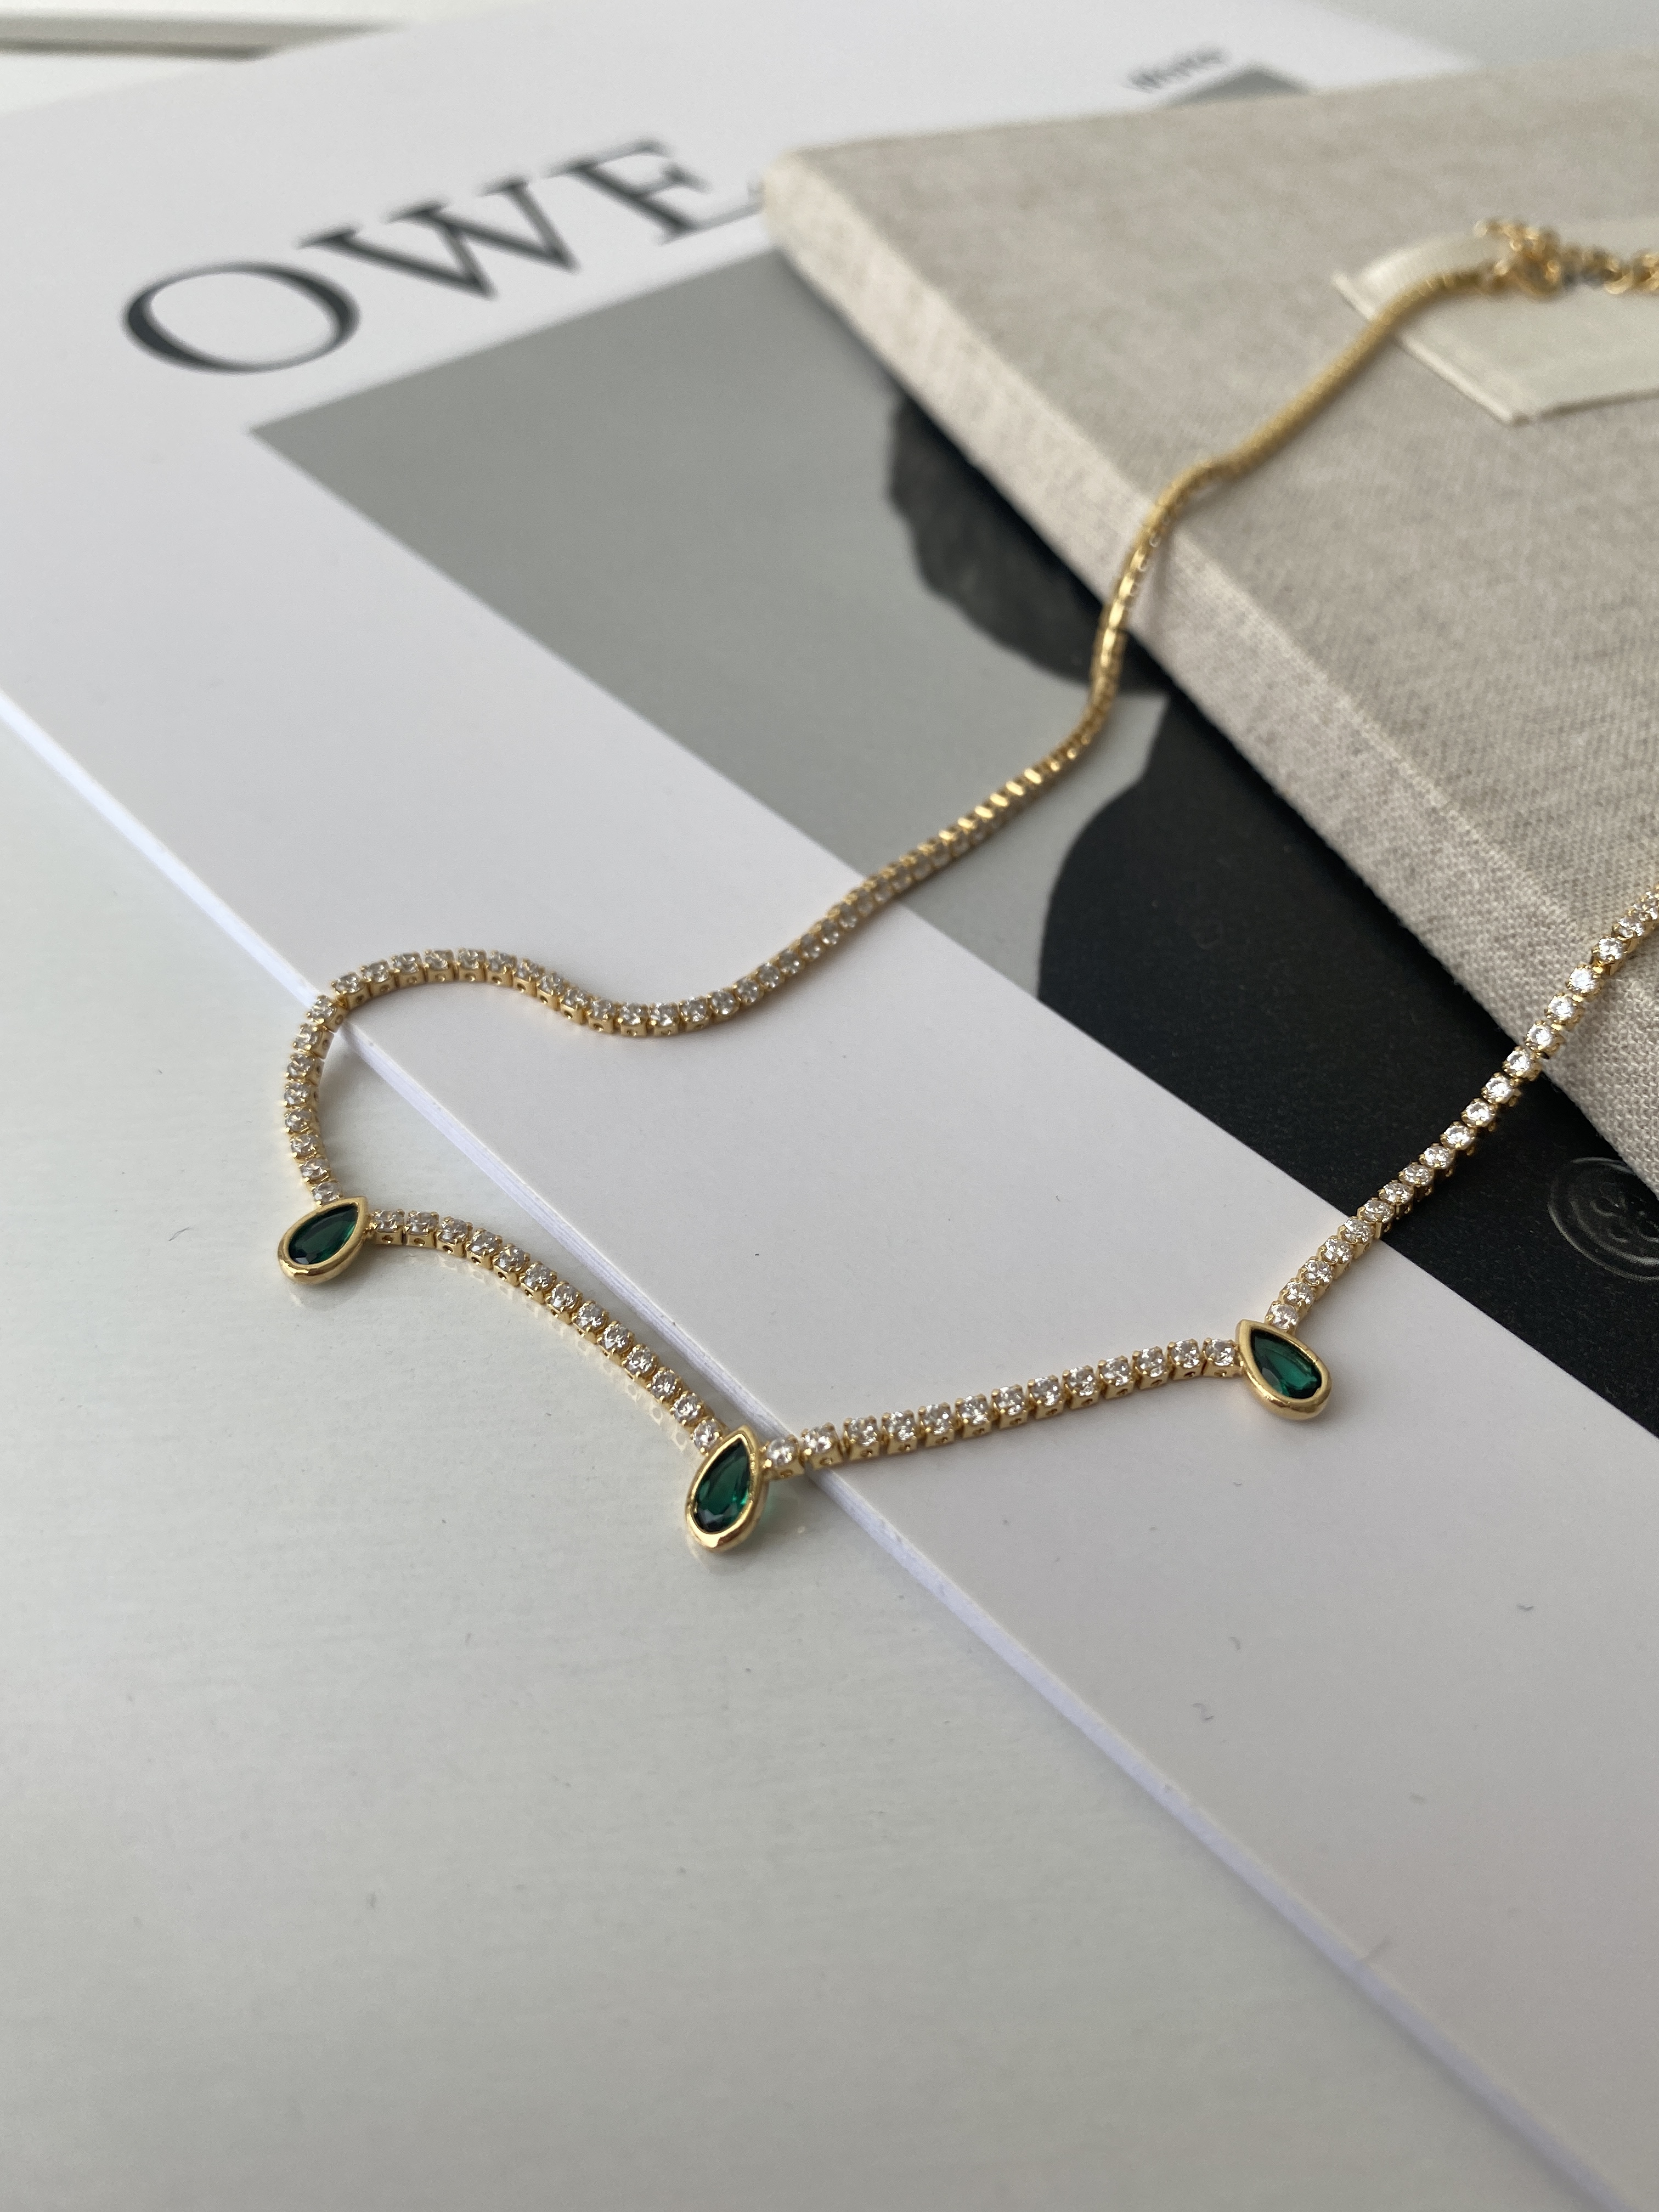 s925 gold, full swarovski stones, 3 teardrop green onyx stones necklace